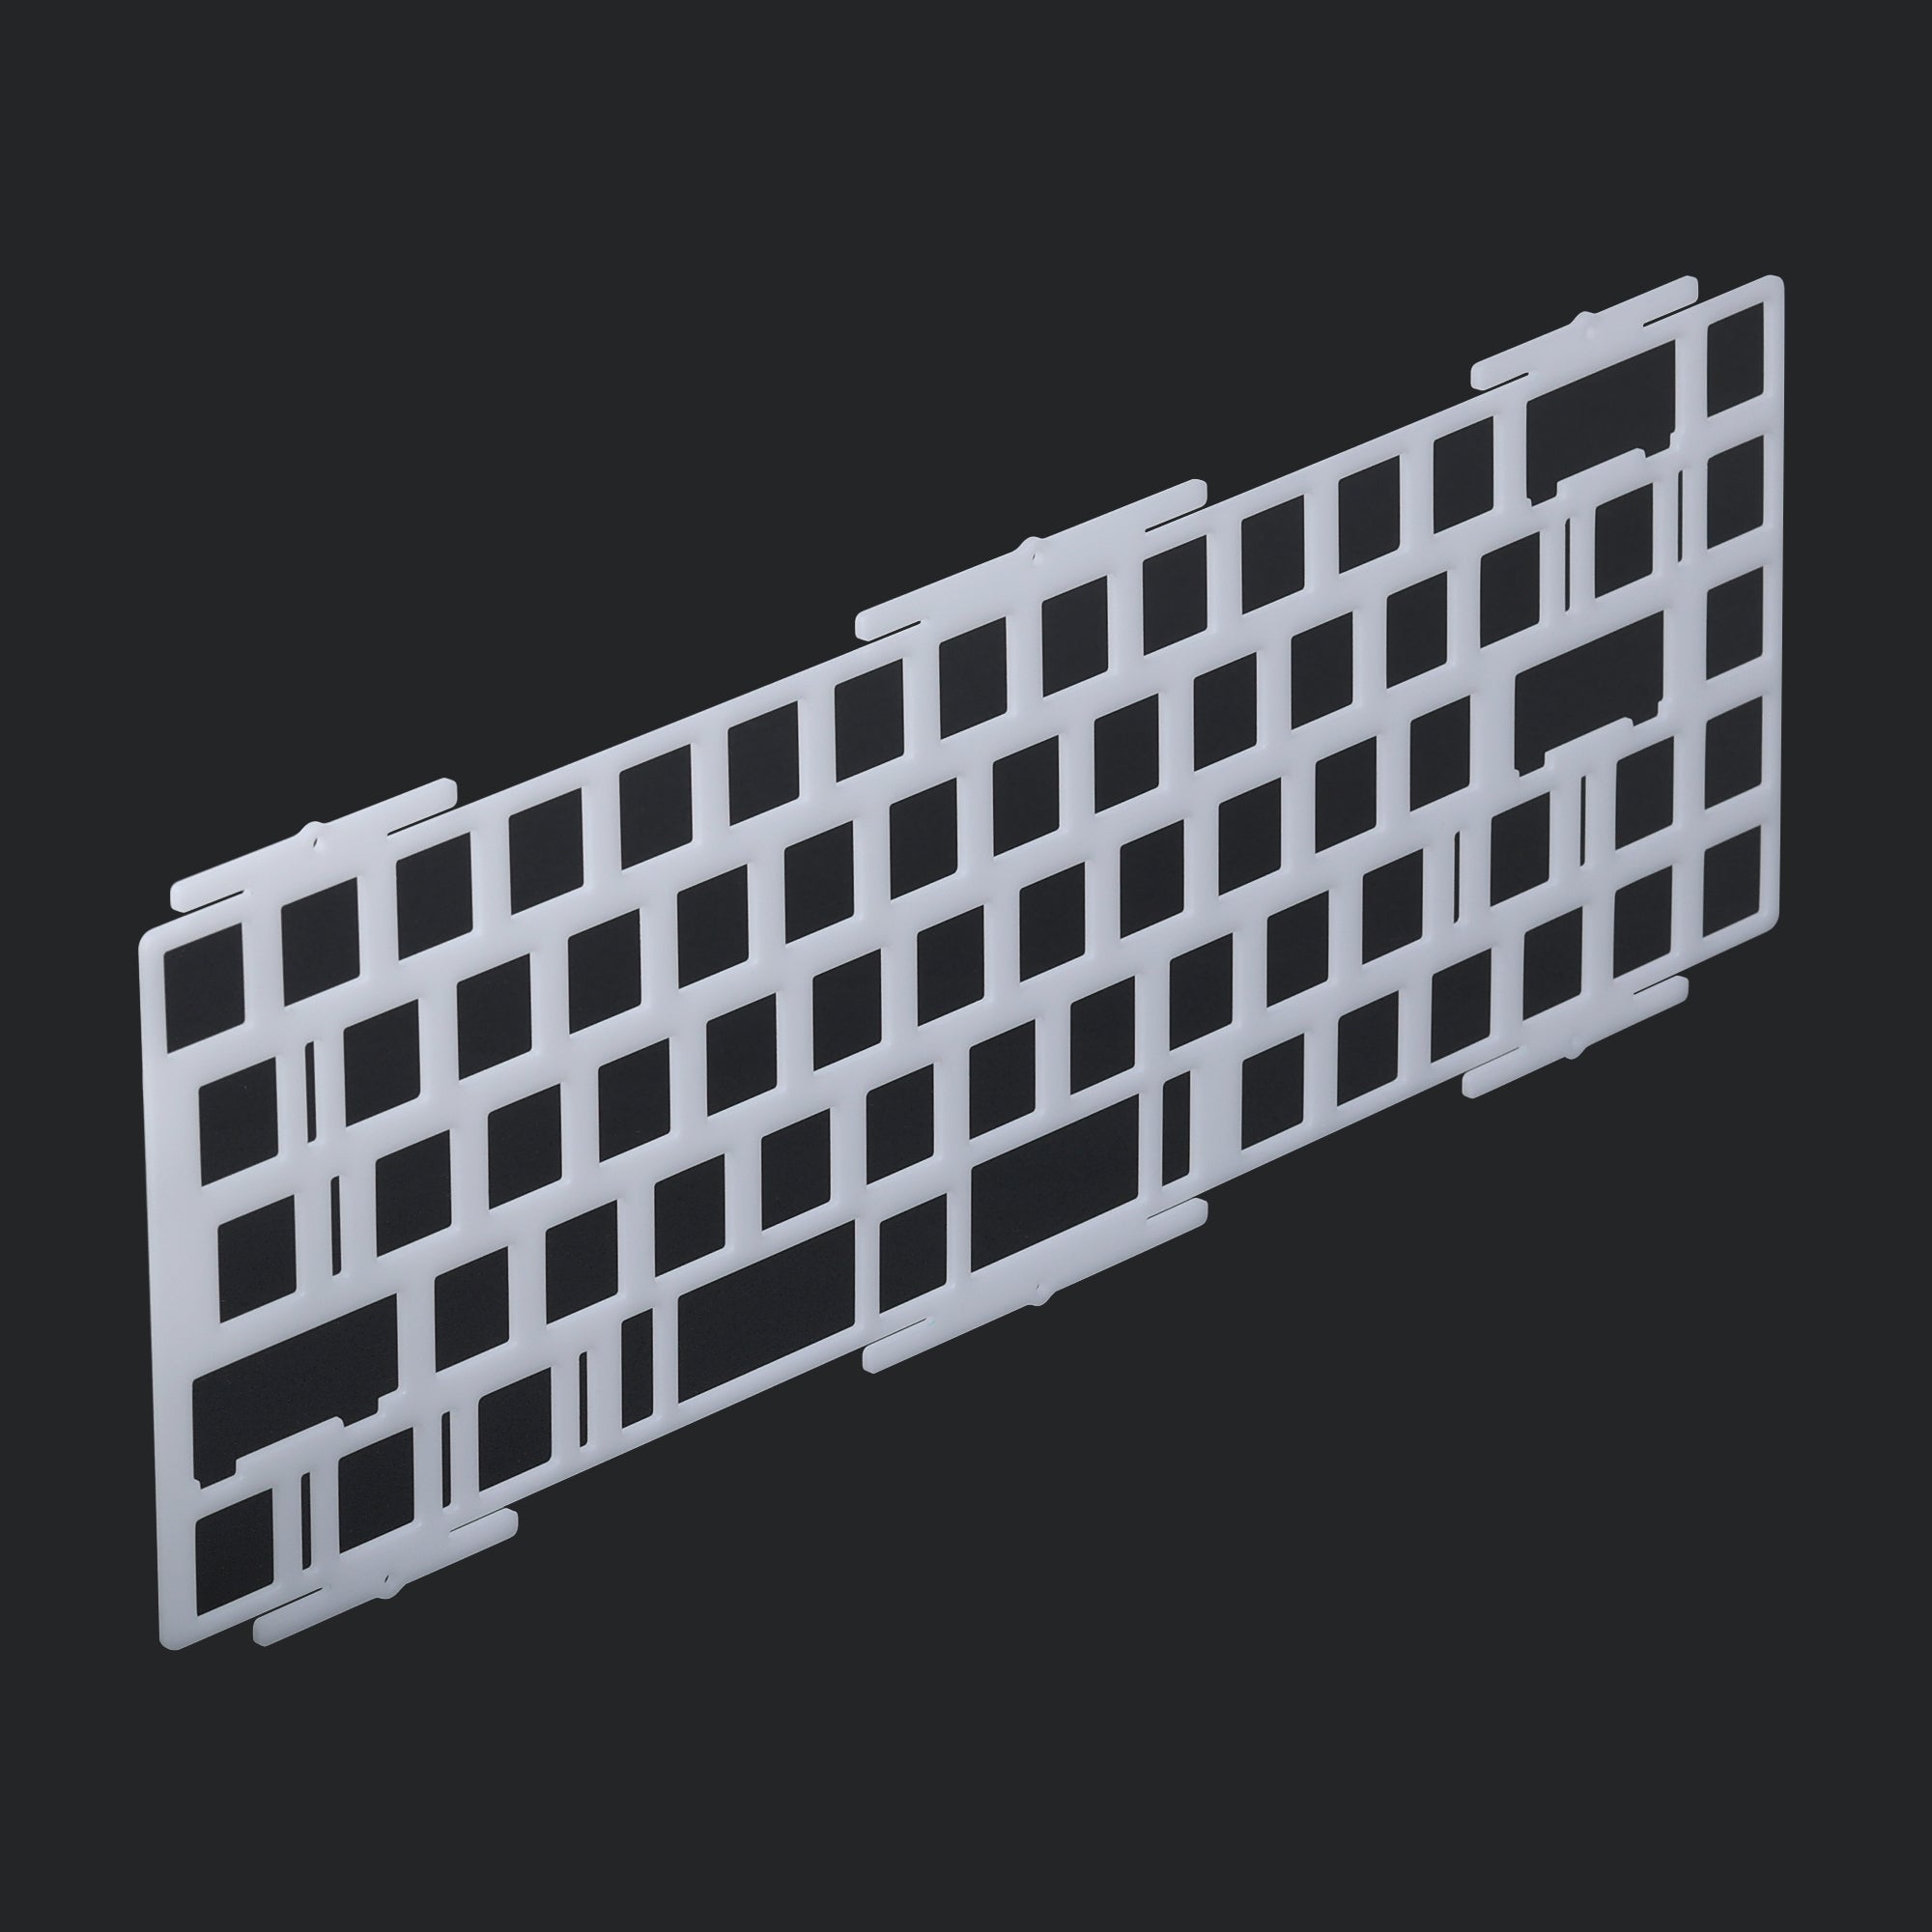 Tofu Jr keyboard accessories – KBDfans® Mechanical Keyboards Store